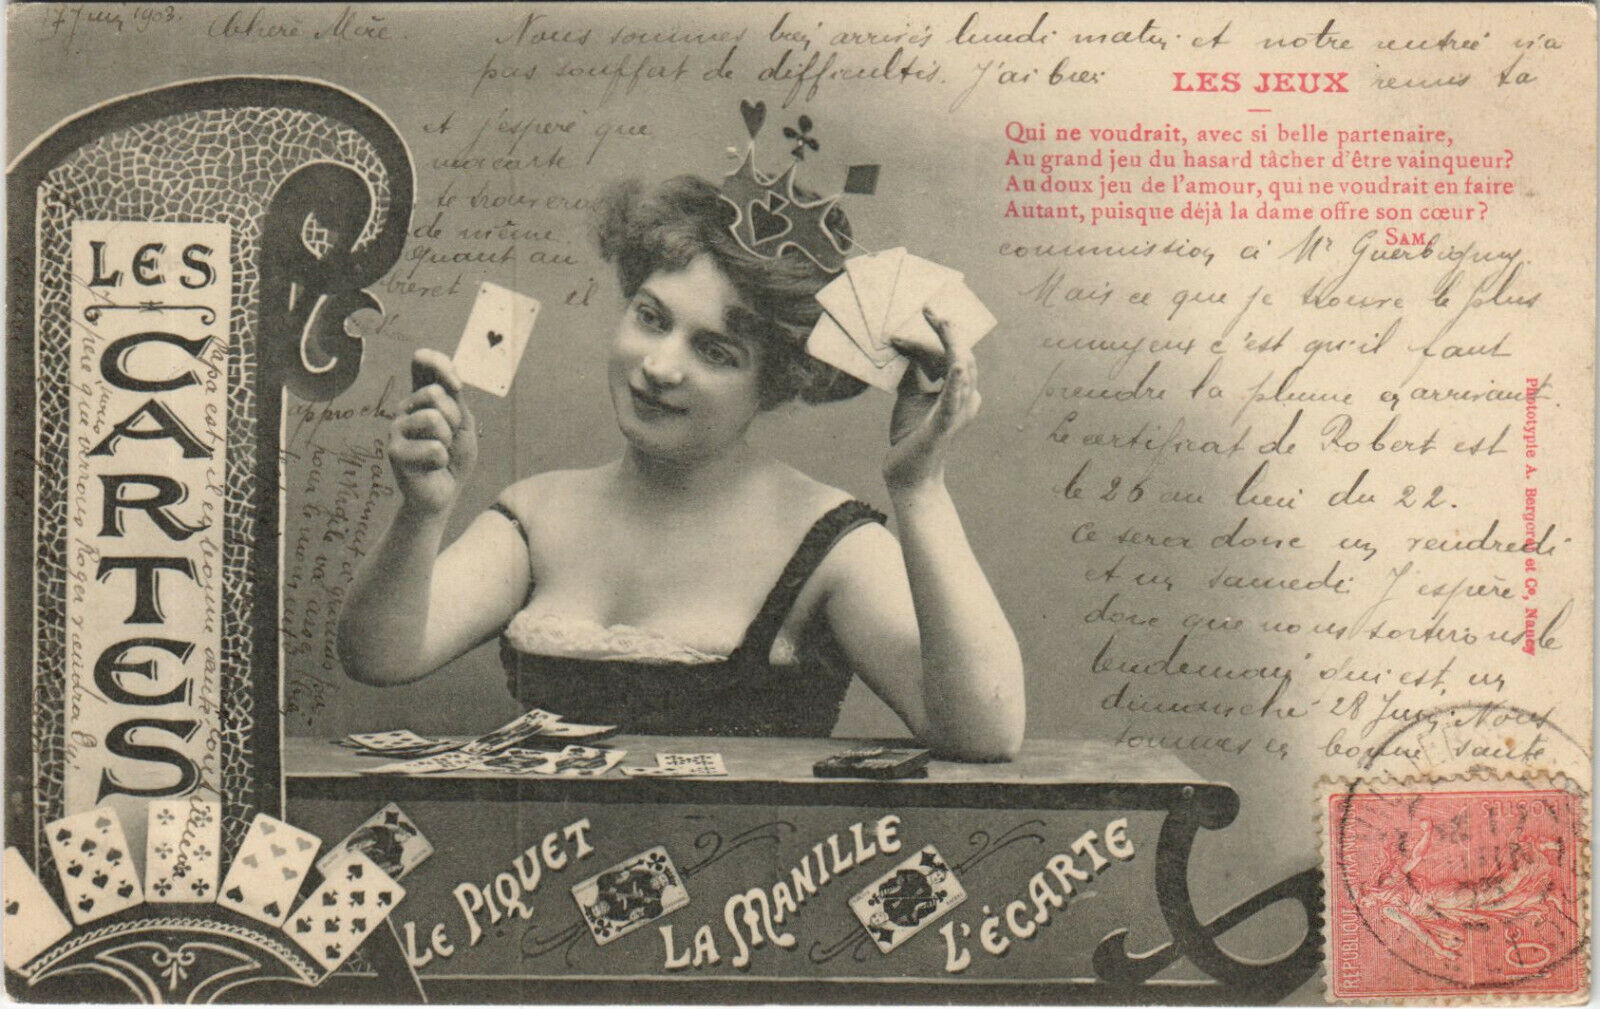 PC SPORTS, GAMES, CARDS, Vintage Postcard (B40543)